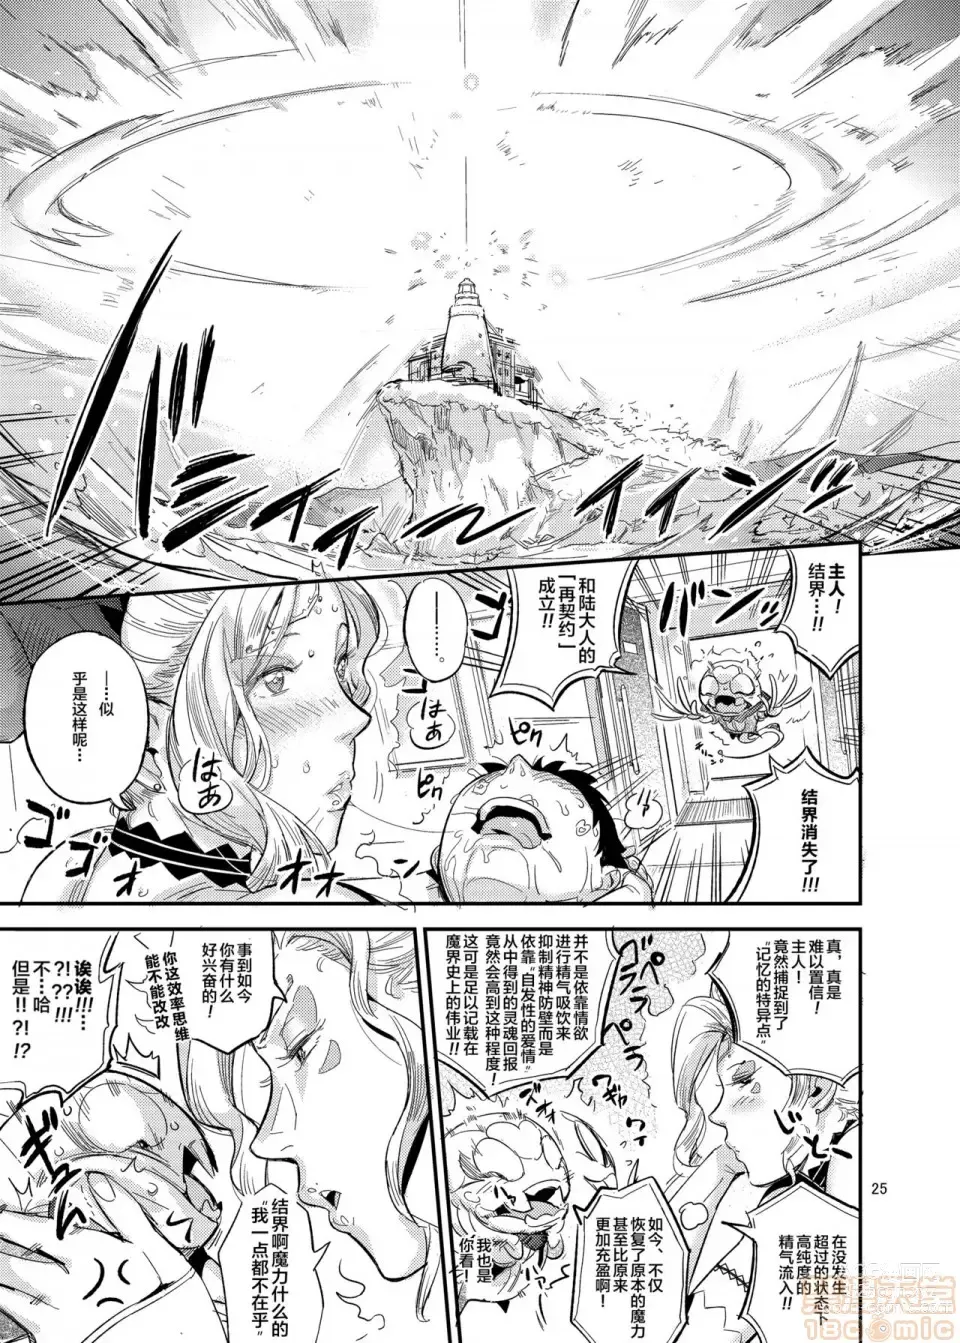 Page 27 of doujinshi 1